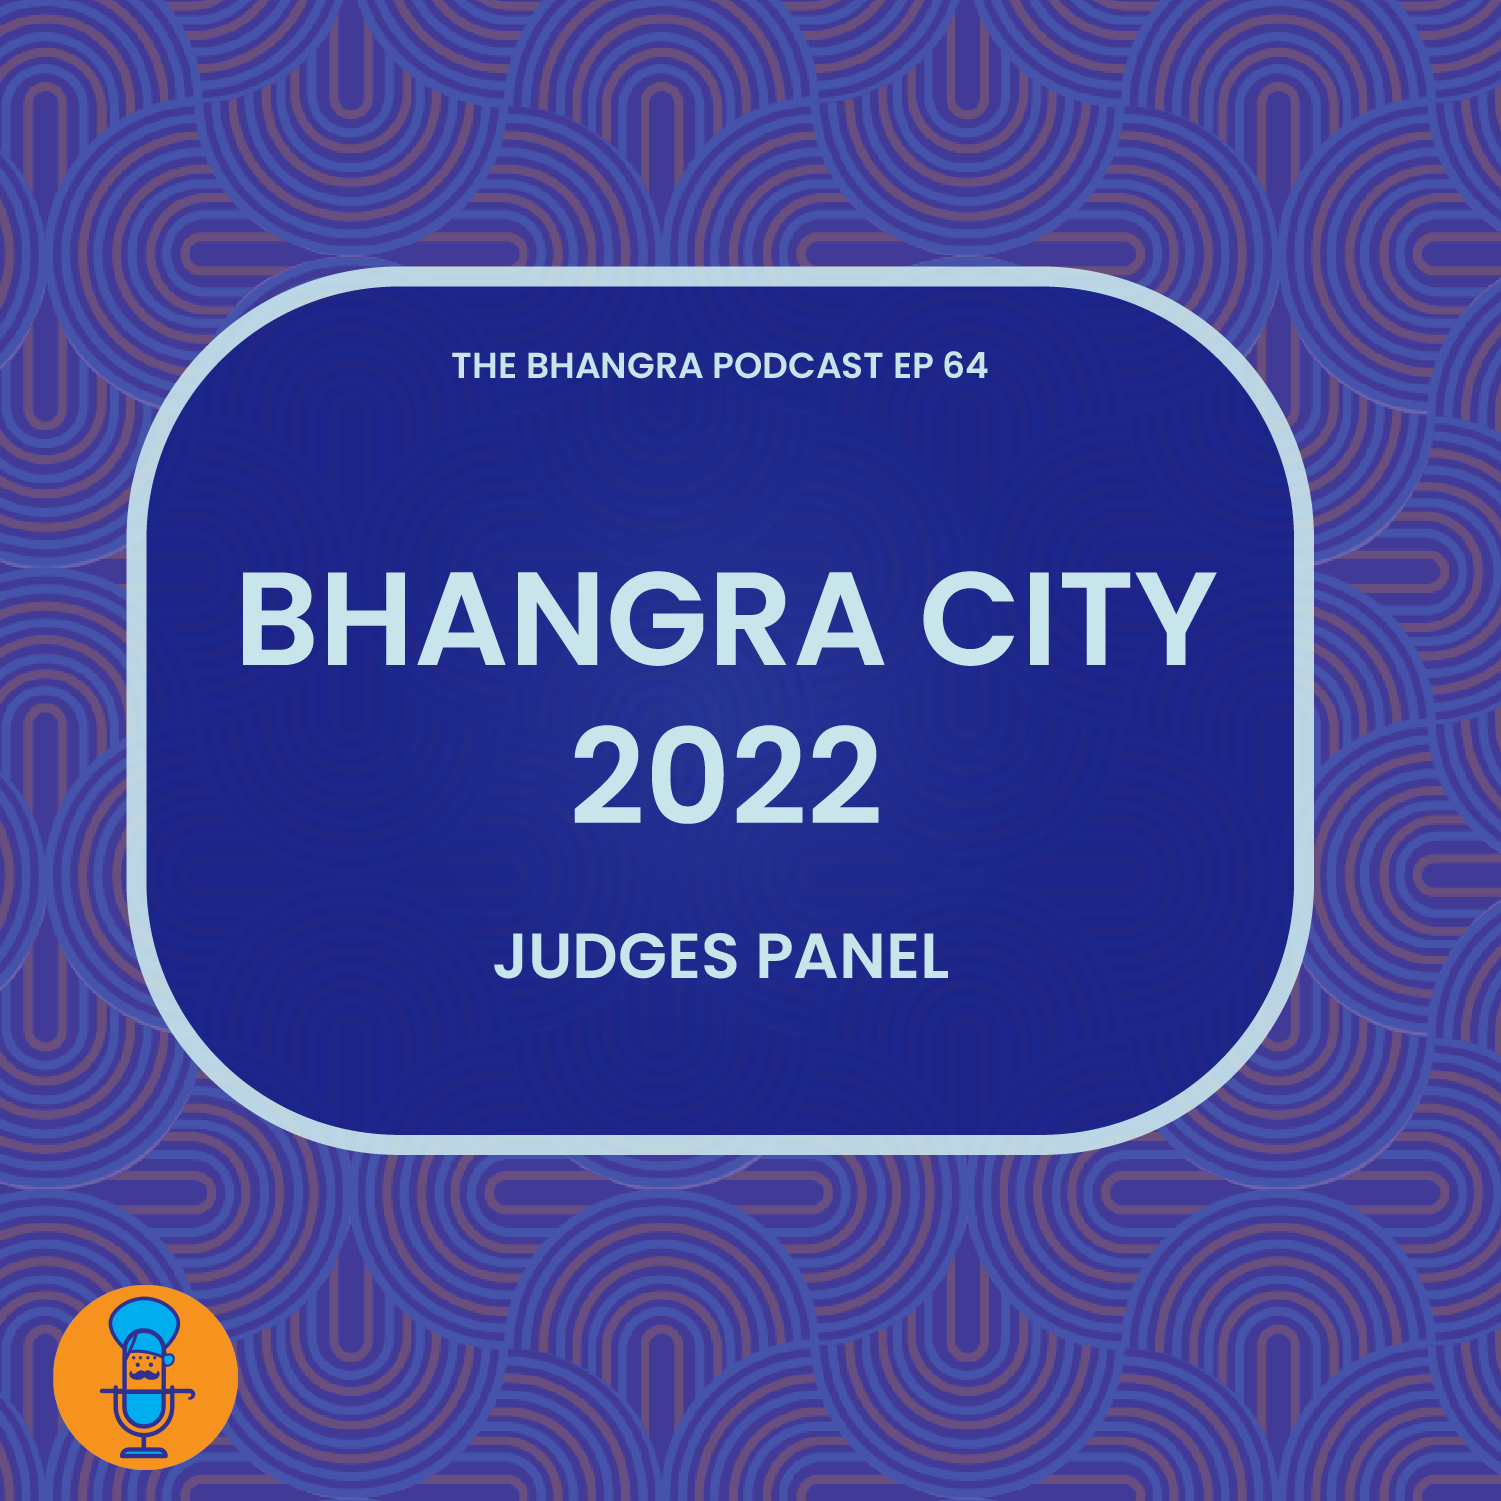 Artwork for podcast The Bhangra Podcast